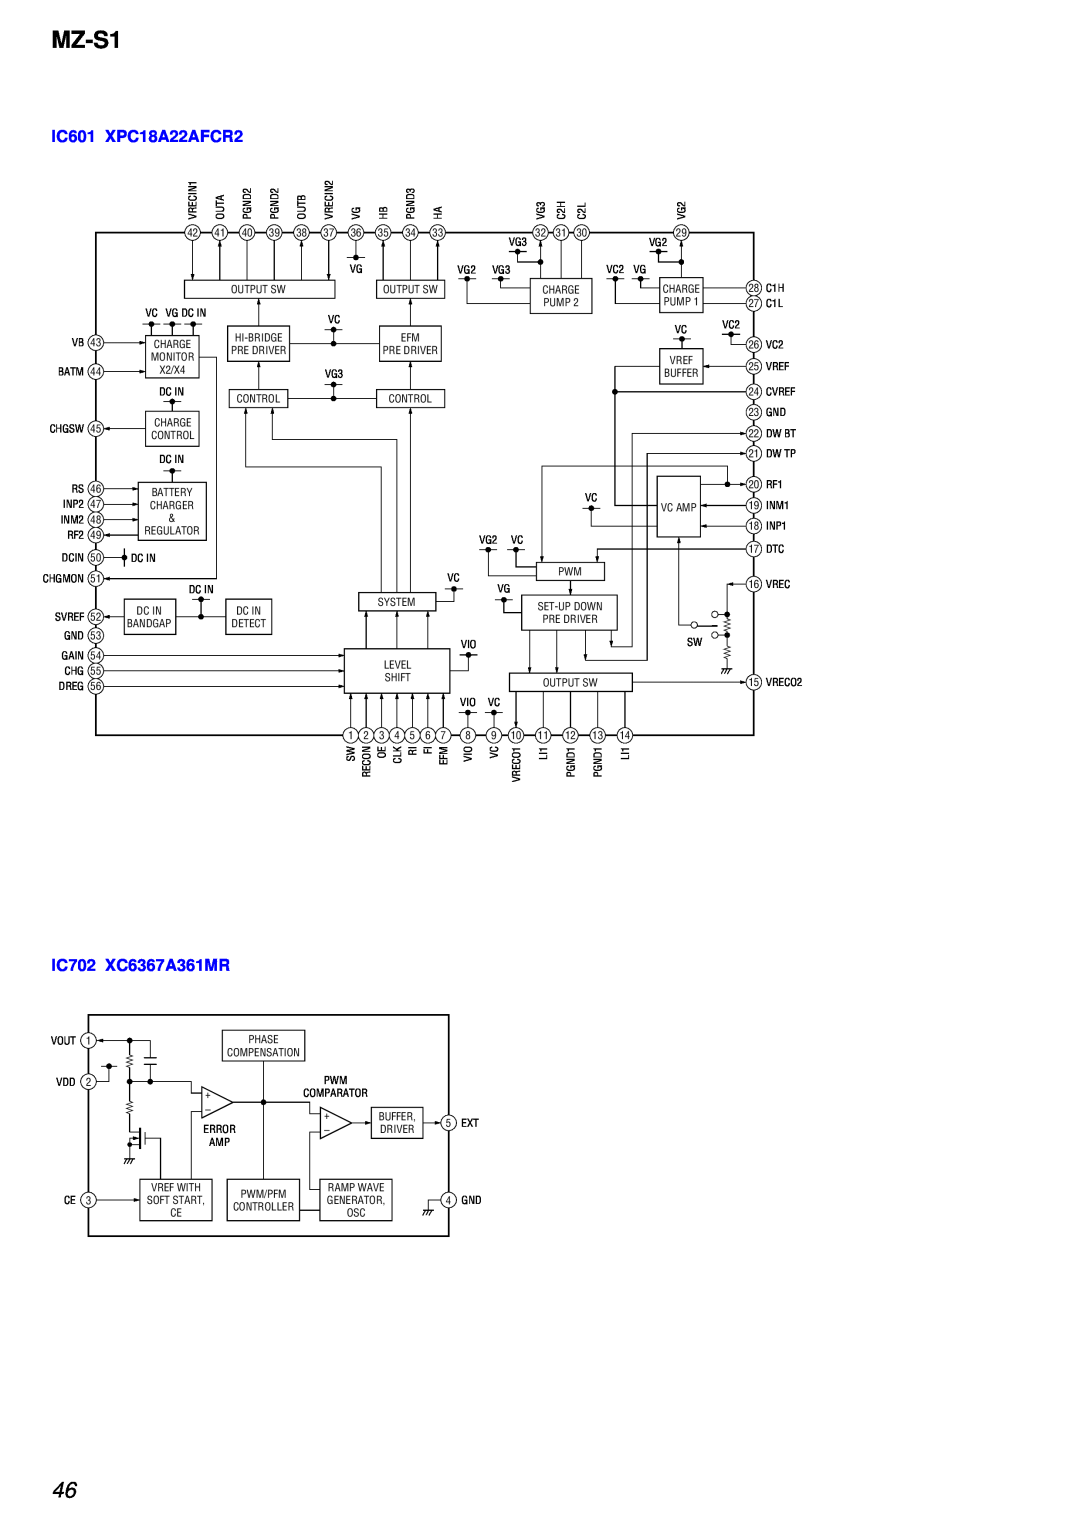 Sony MZ-S1 service manual IC601 XPC18A22AFCR2, IC702 XC6367A361MR 